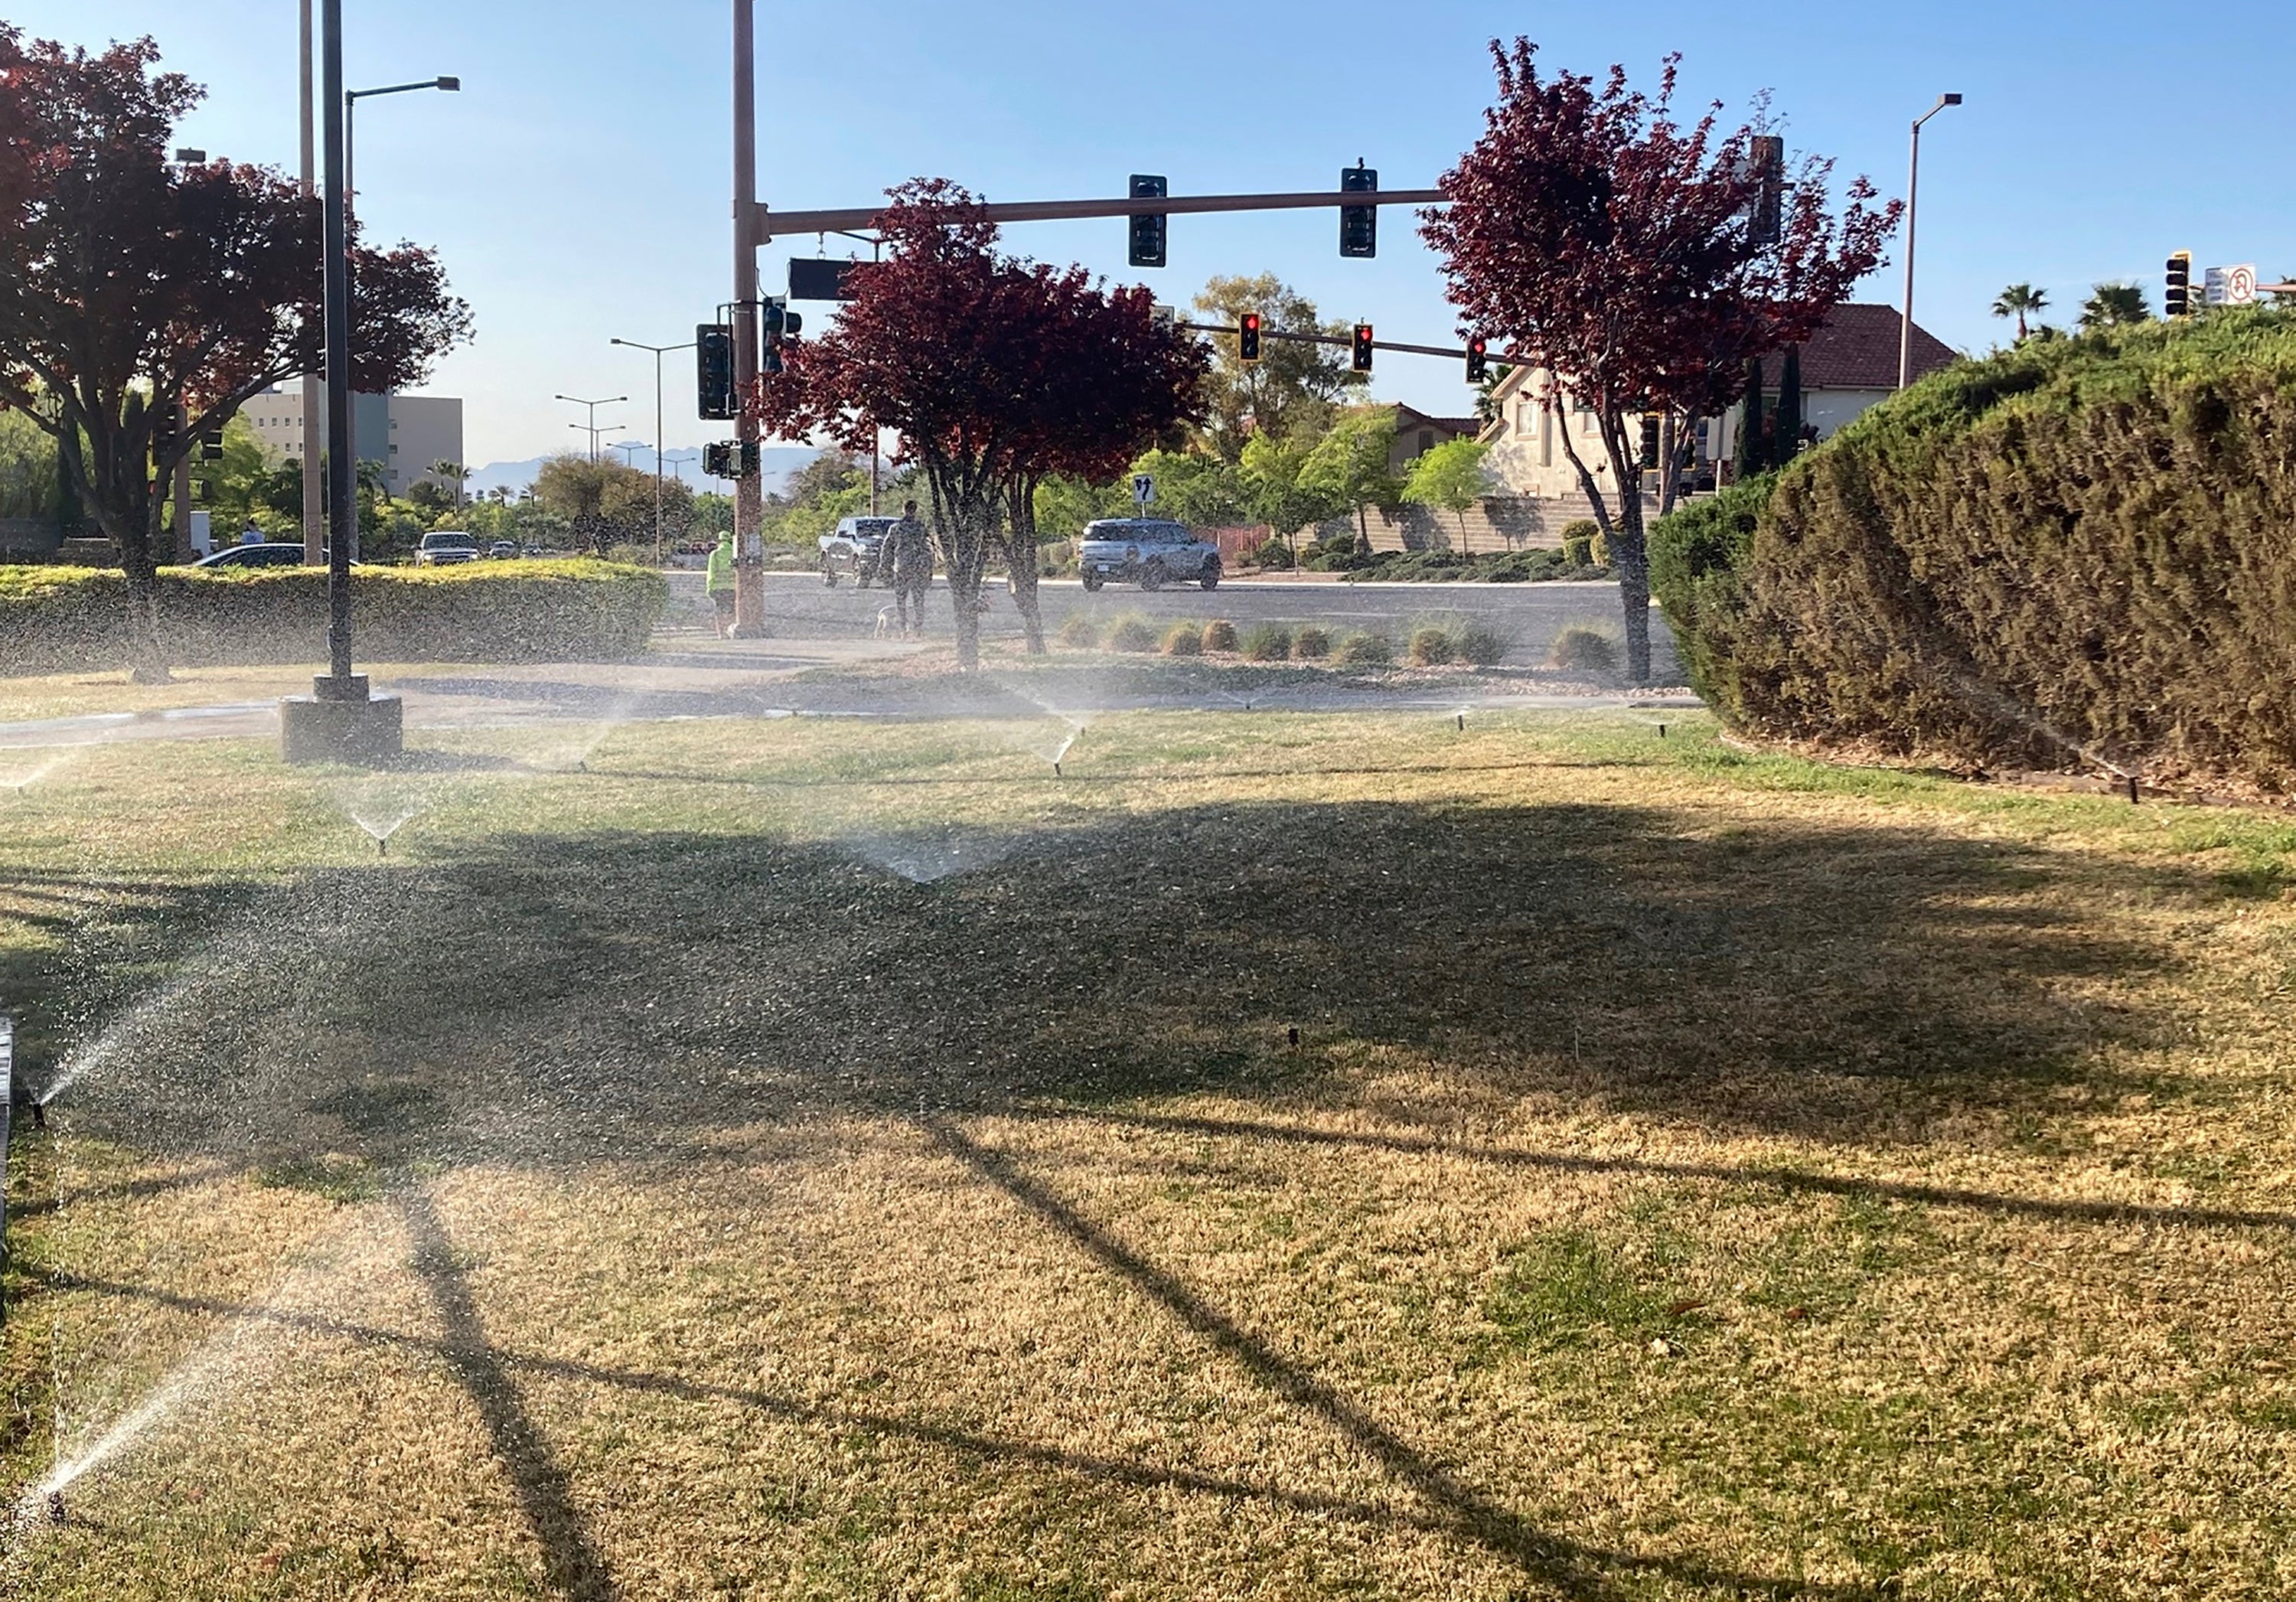 Sprinklers water grass near a street corner on 9 April, 2021, in the Summerlin neighborhood of Las Vegas.